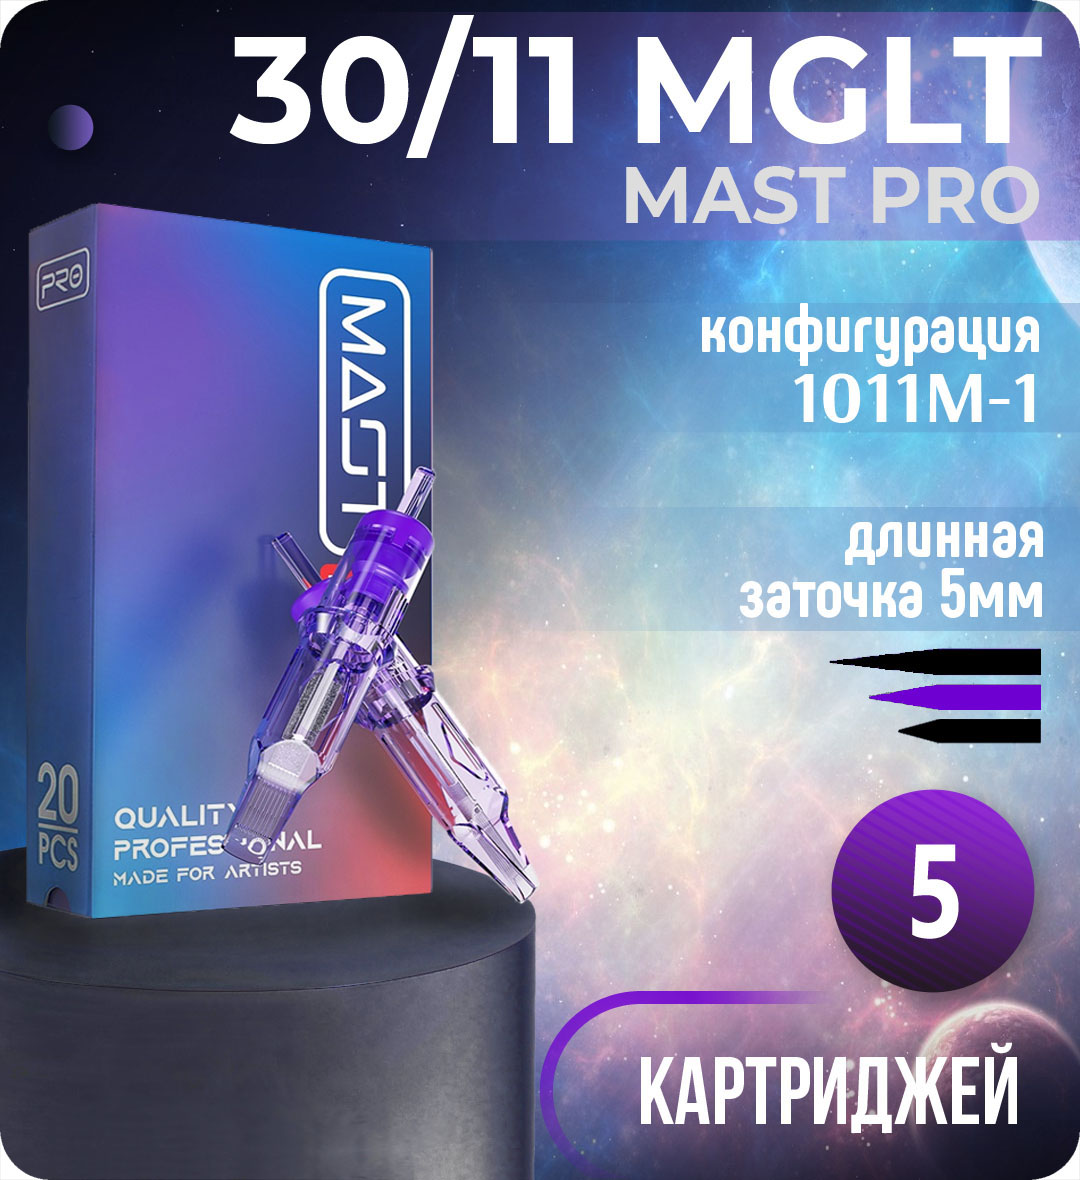 Картриджи Mast Pro 30/11 MGLT (1011M-1) для тату, перманентного макияжа и татуажа Dragonhawk 5шт